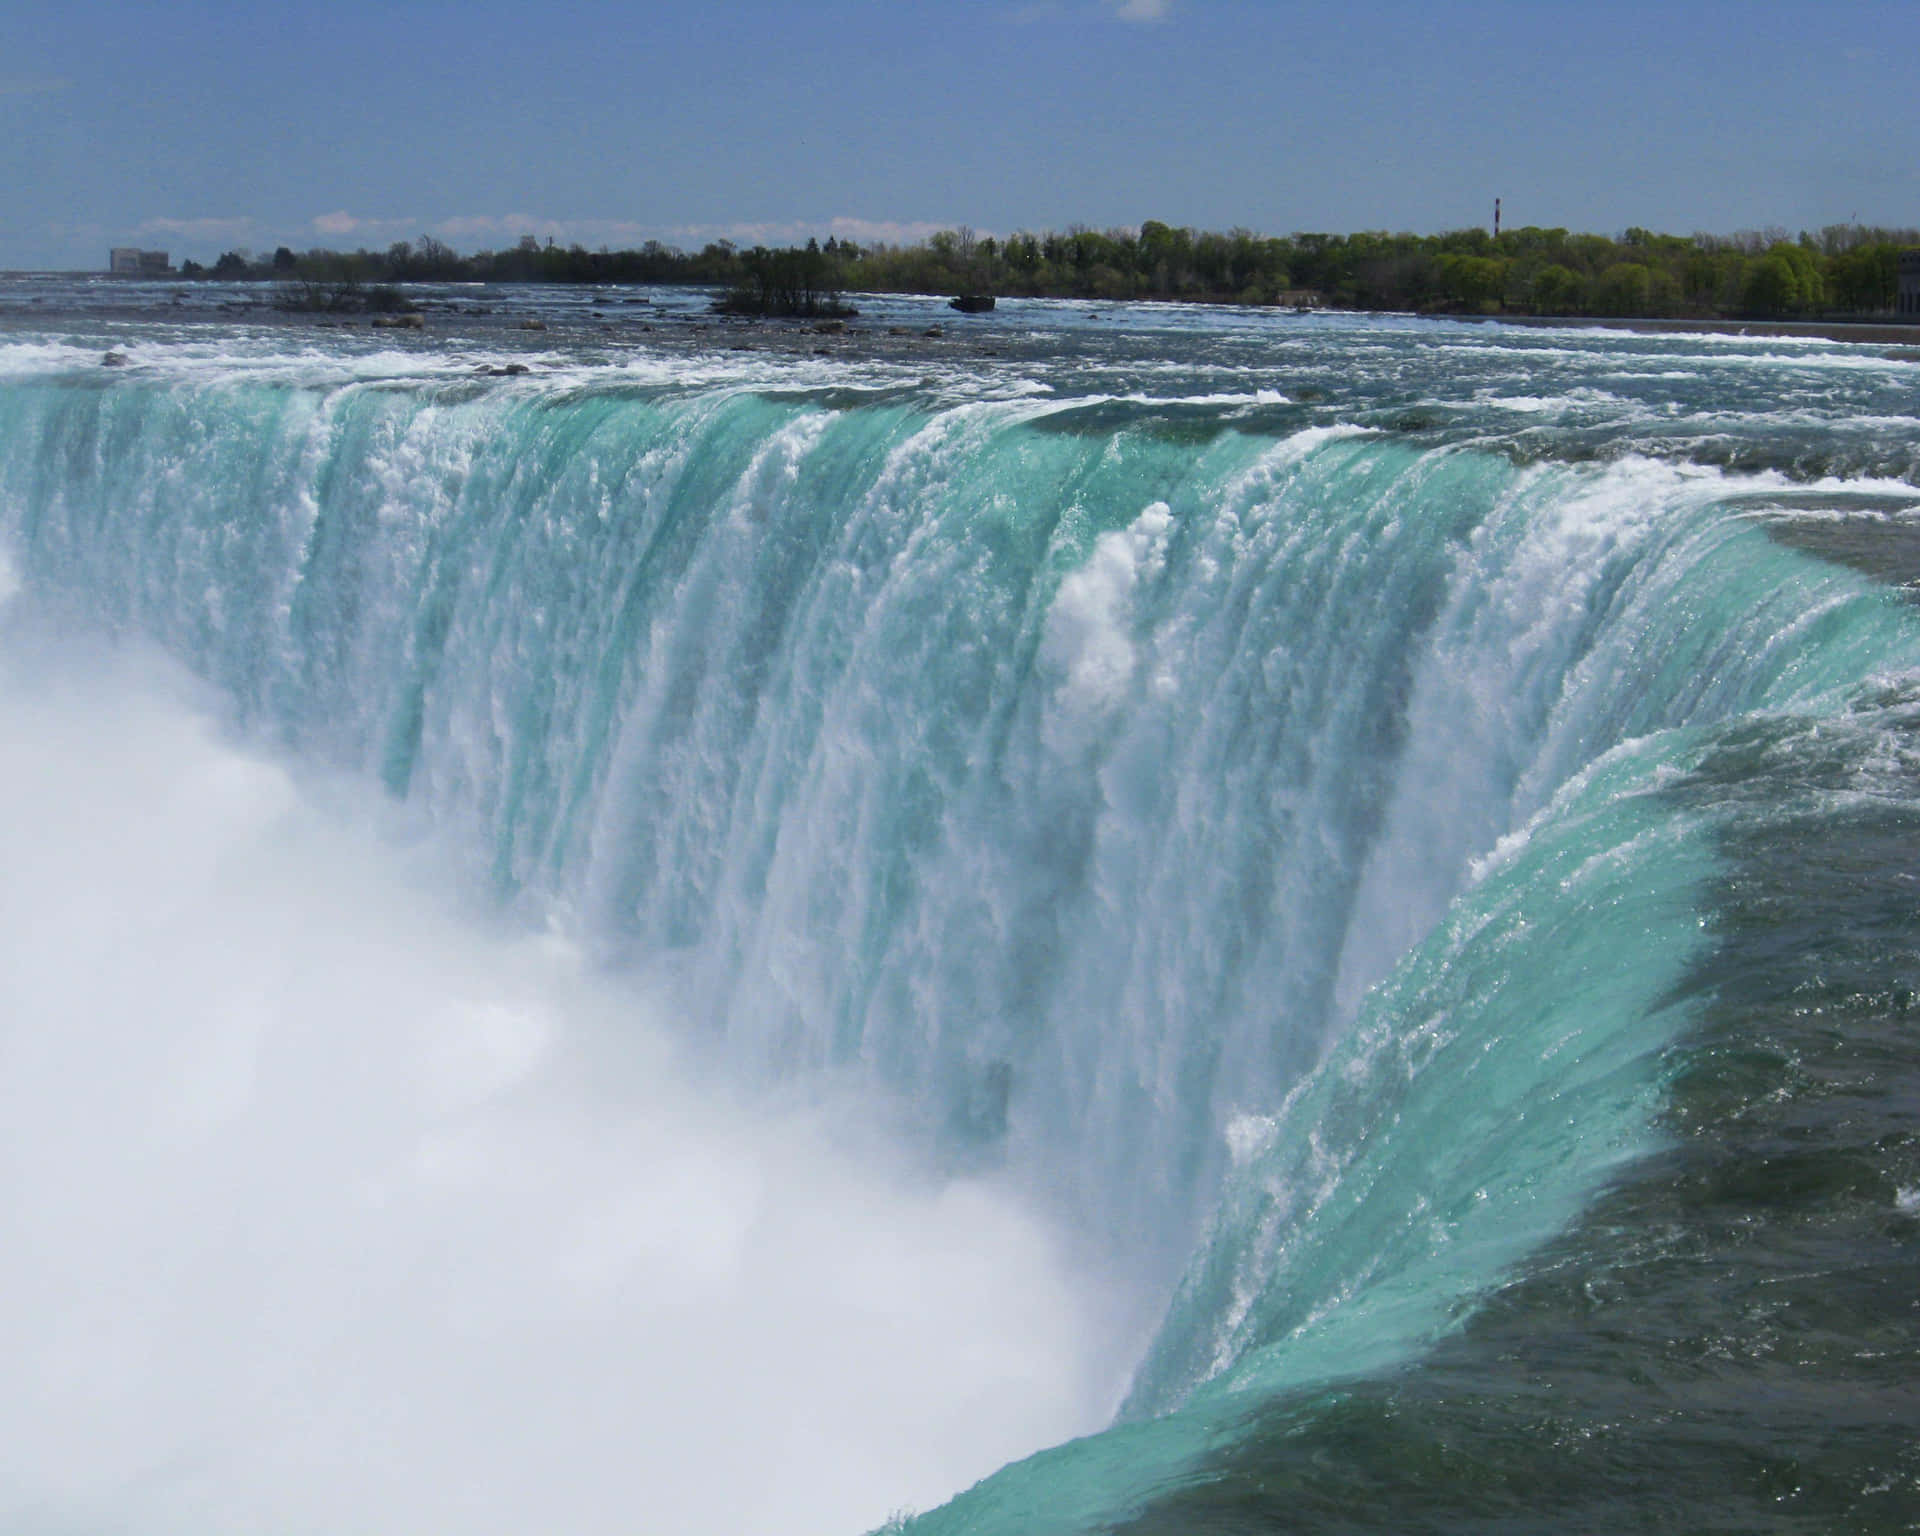 A majestic view of Niagara Falls.